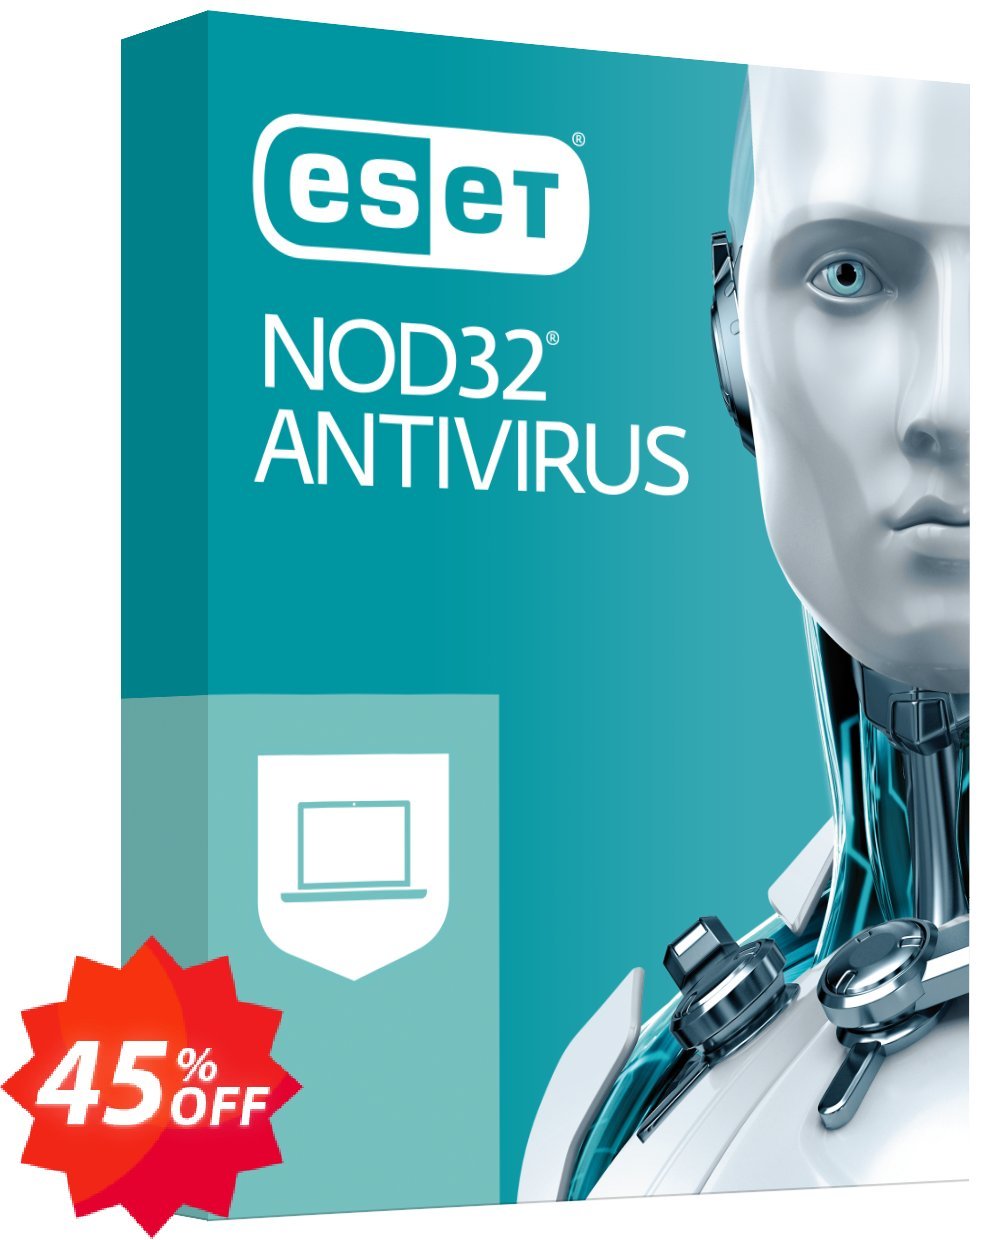 ESET NOD32 Antivirus - Renew 3 Years 2 Devices Coupon code 45% discount 